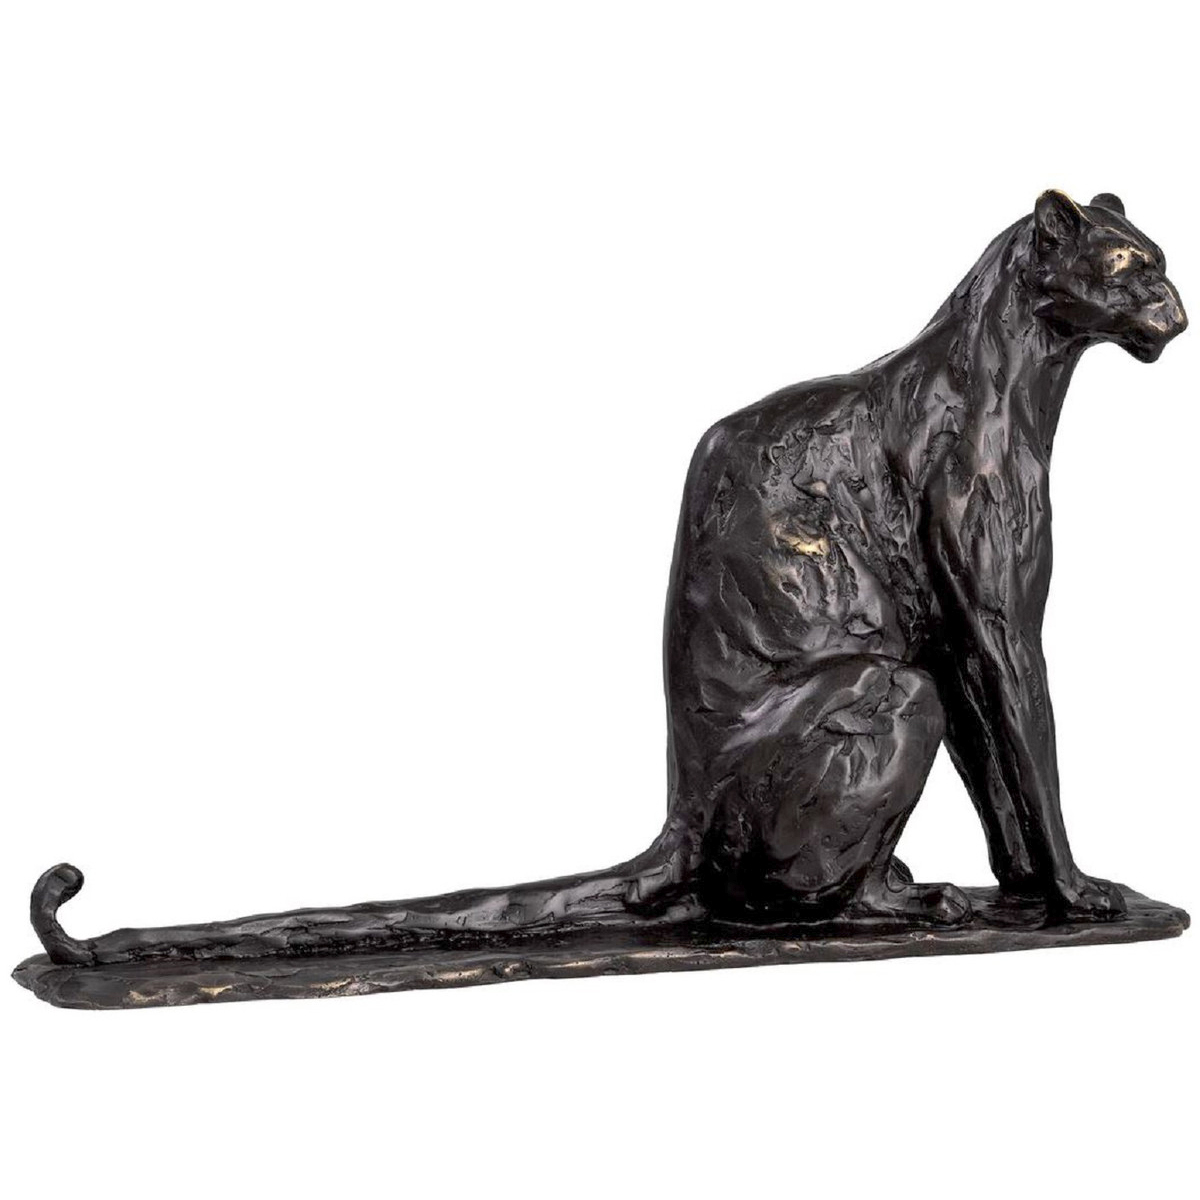 Black Panther Animal Sculpture